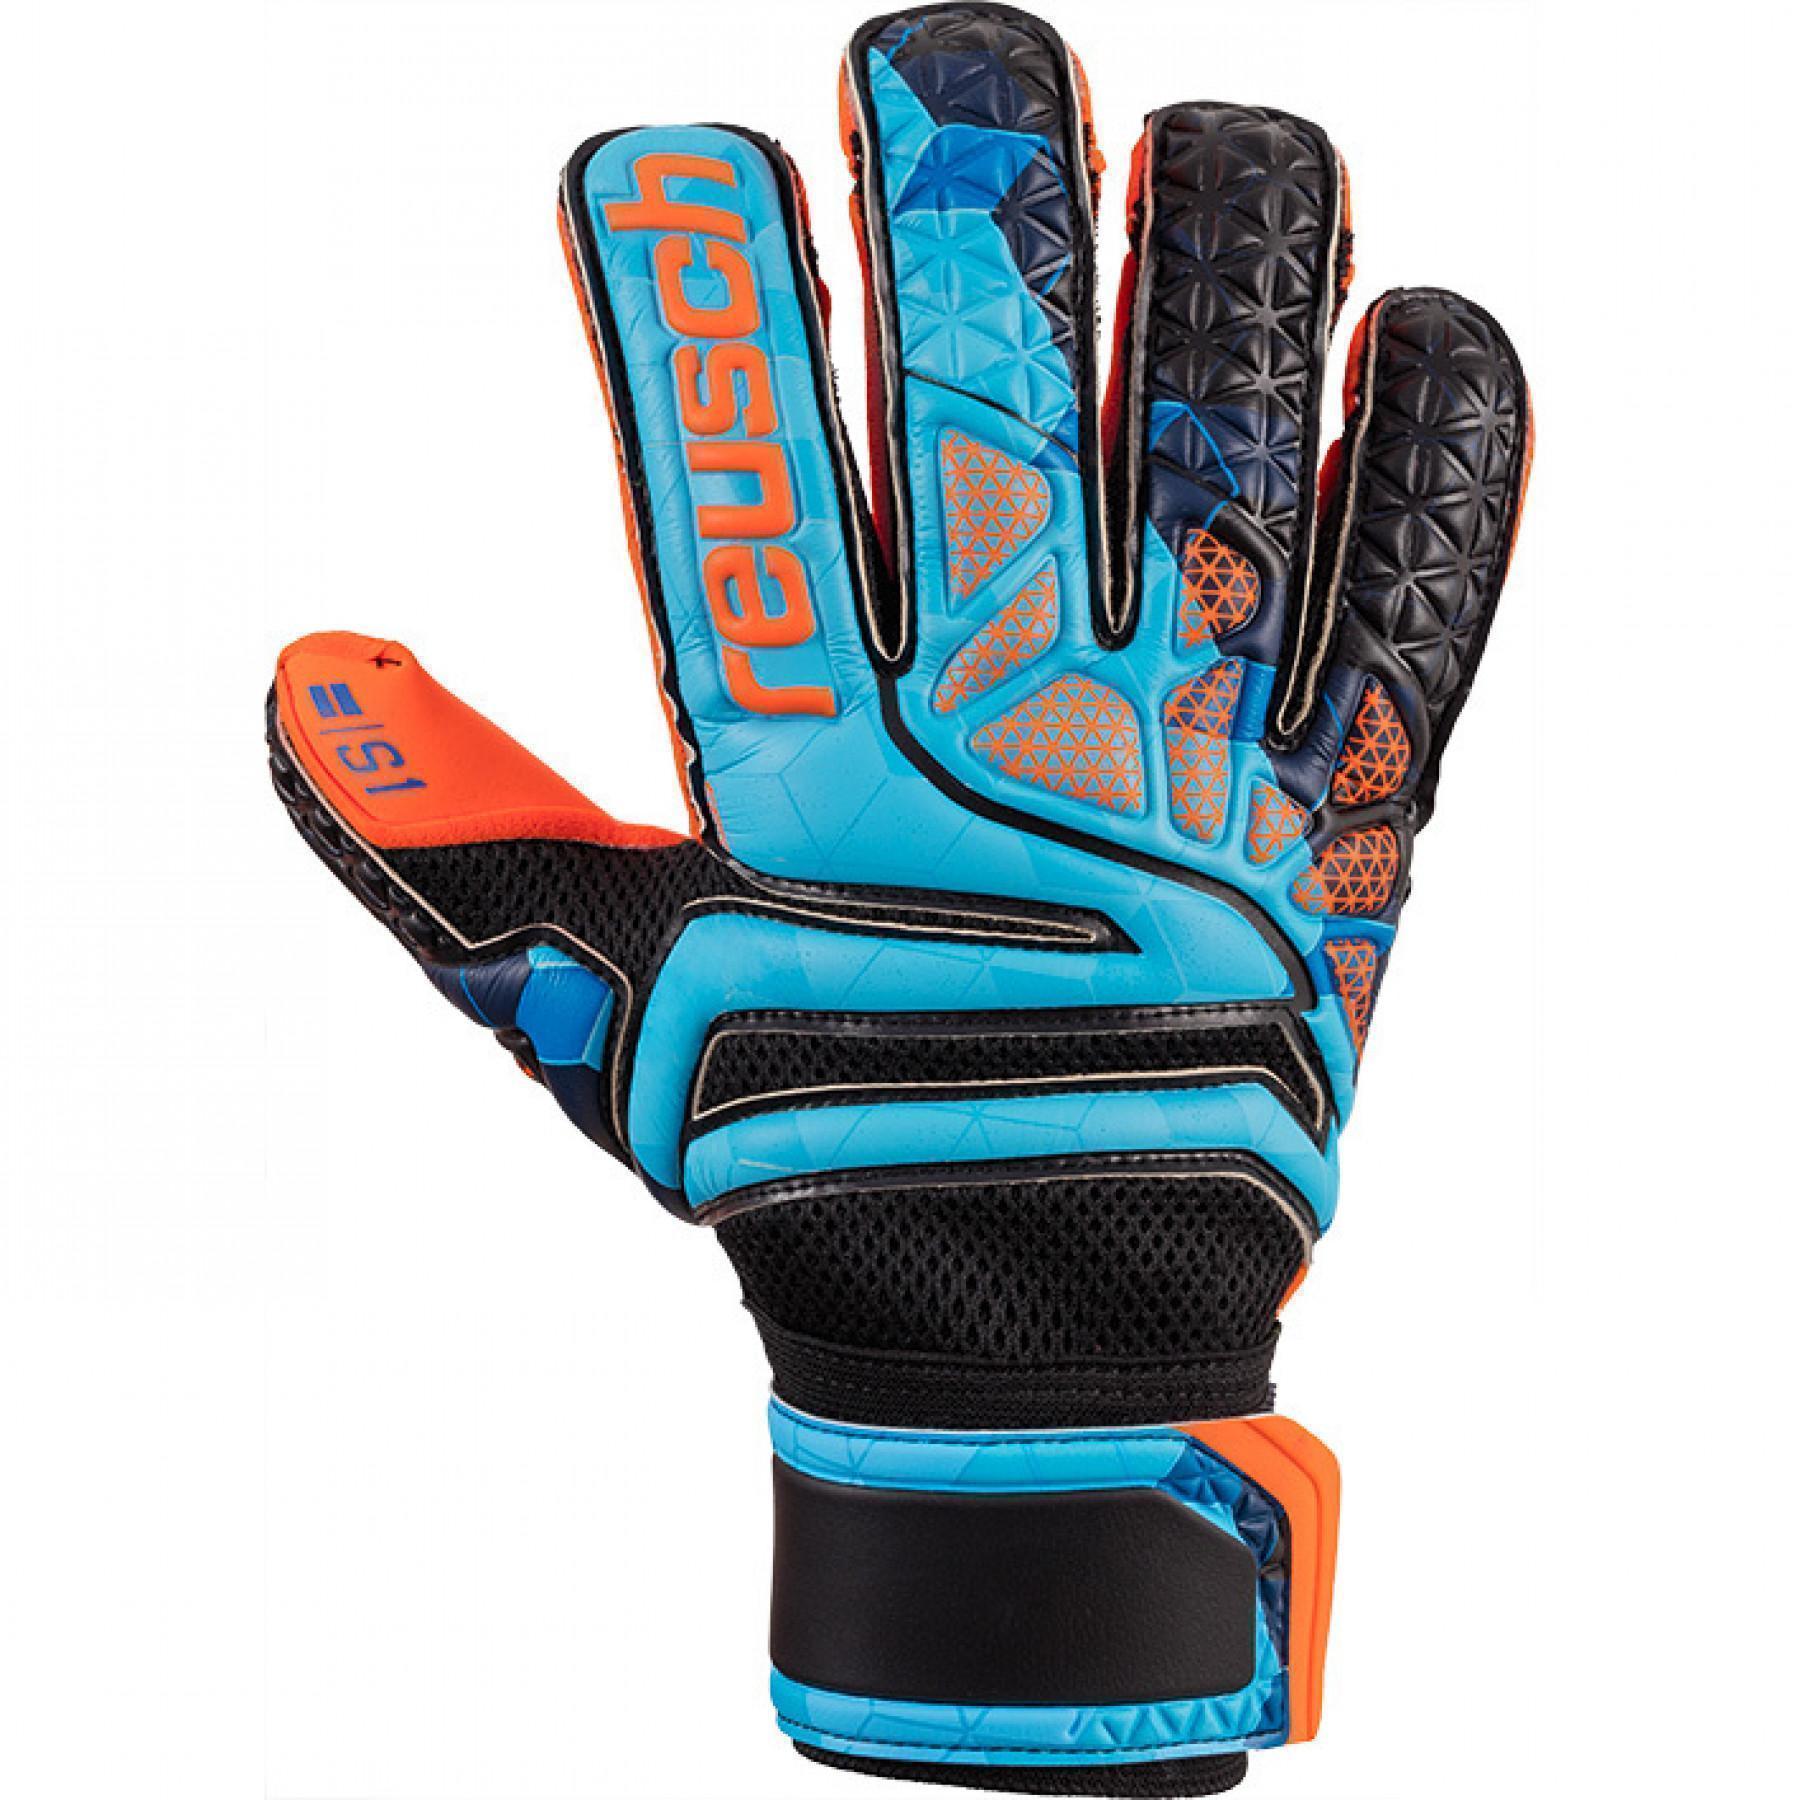 Goalkeeper gloves Reusch Prisma Prime S1 Evolution LTD